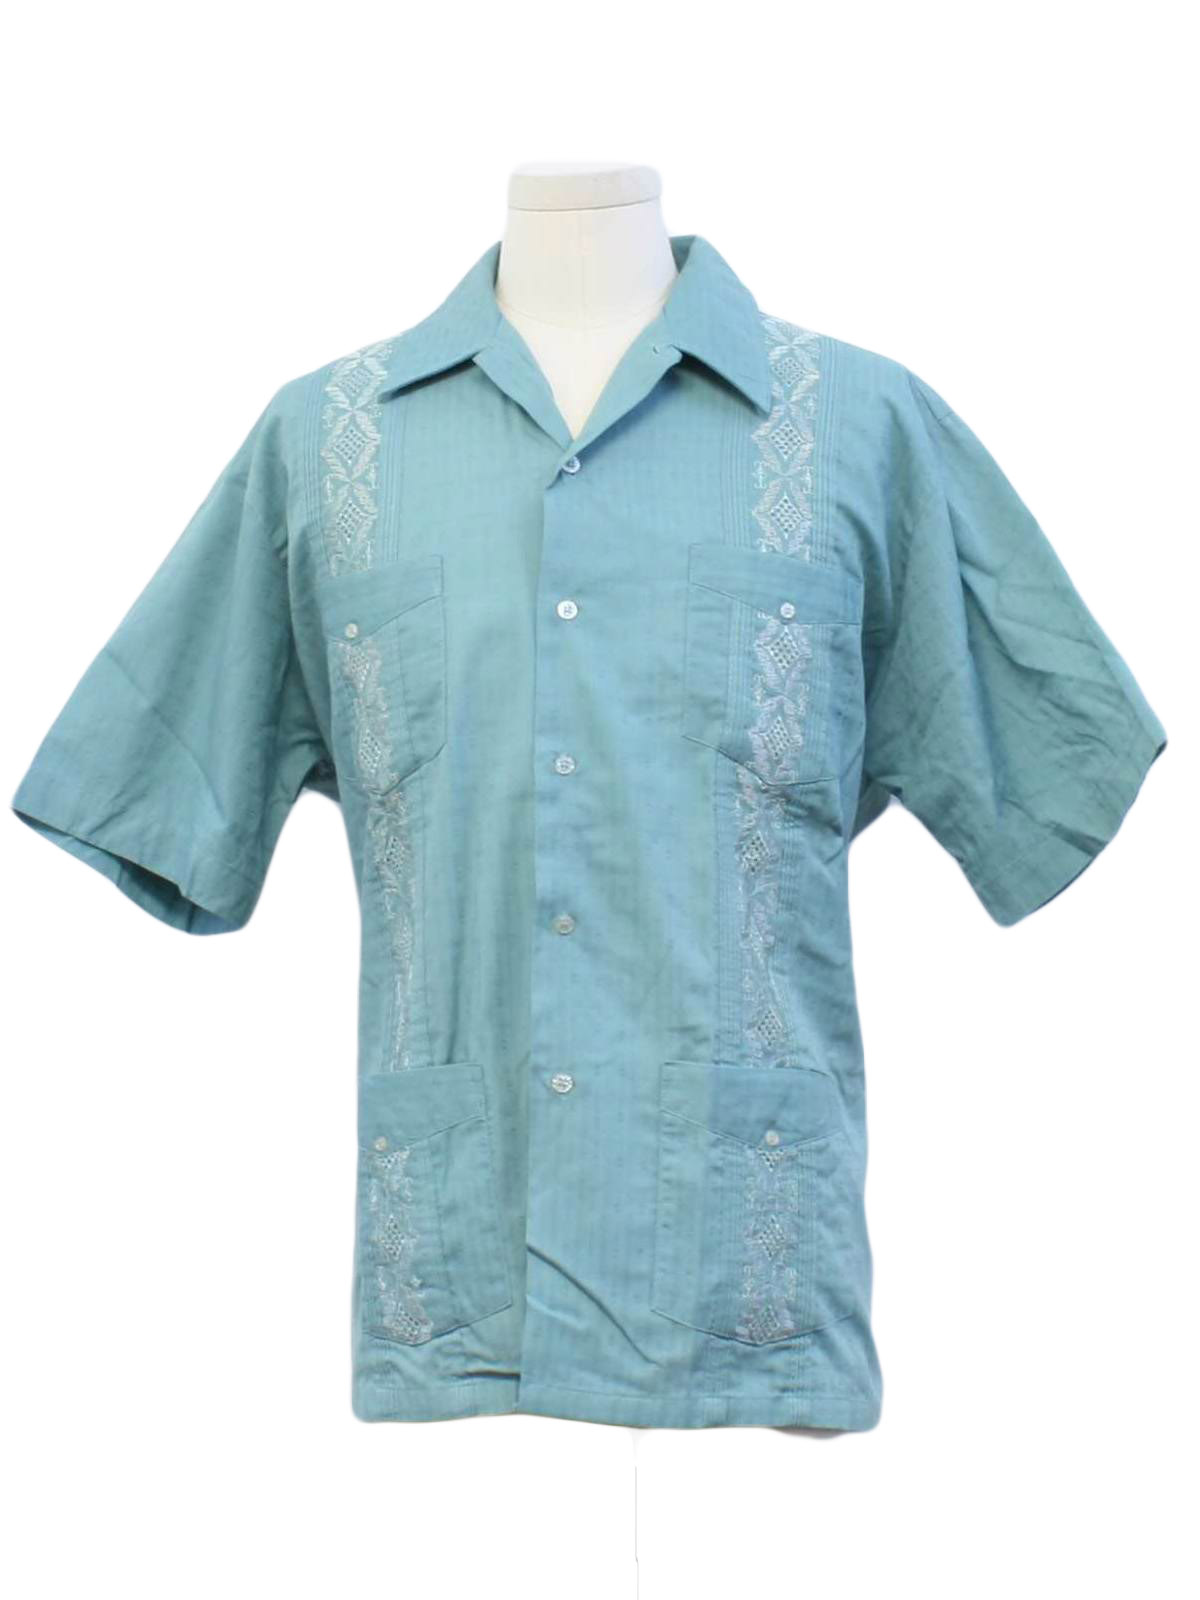 Vintage 1980's Guayabera Shirt: 80s -Haband- Mens teal green with ...